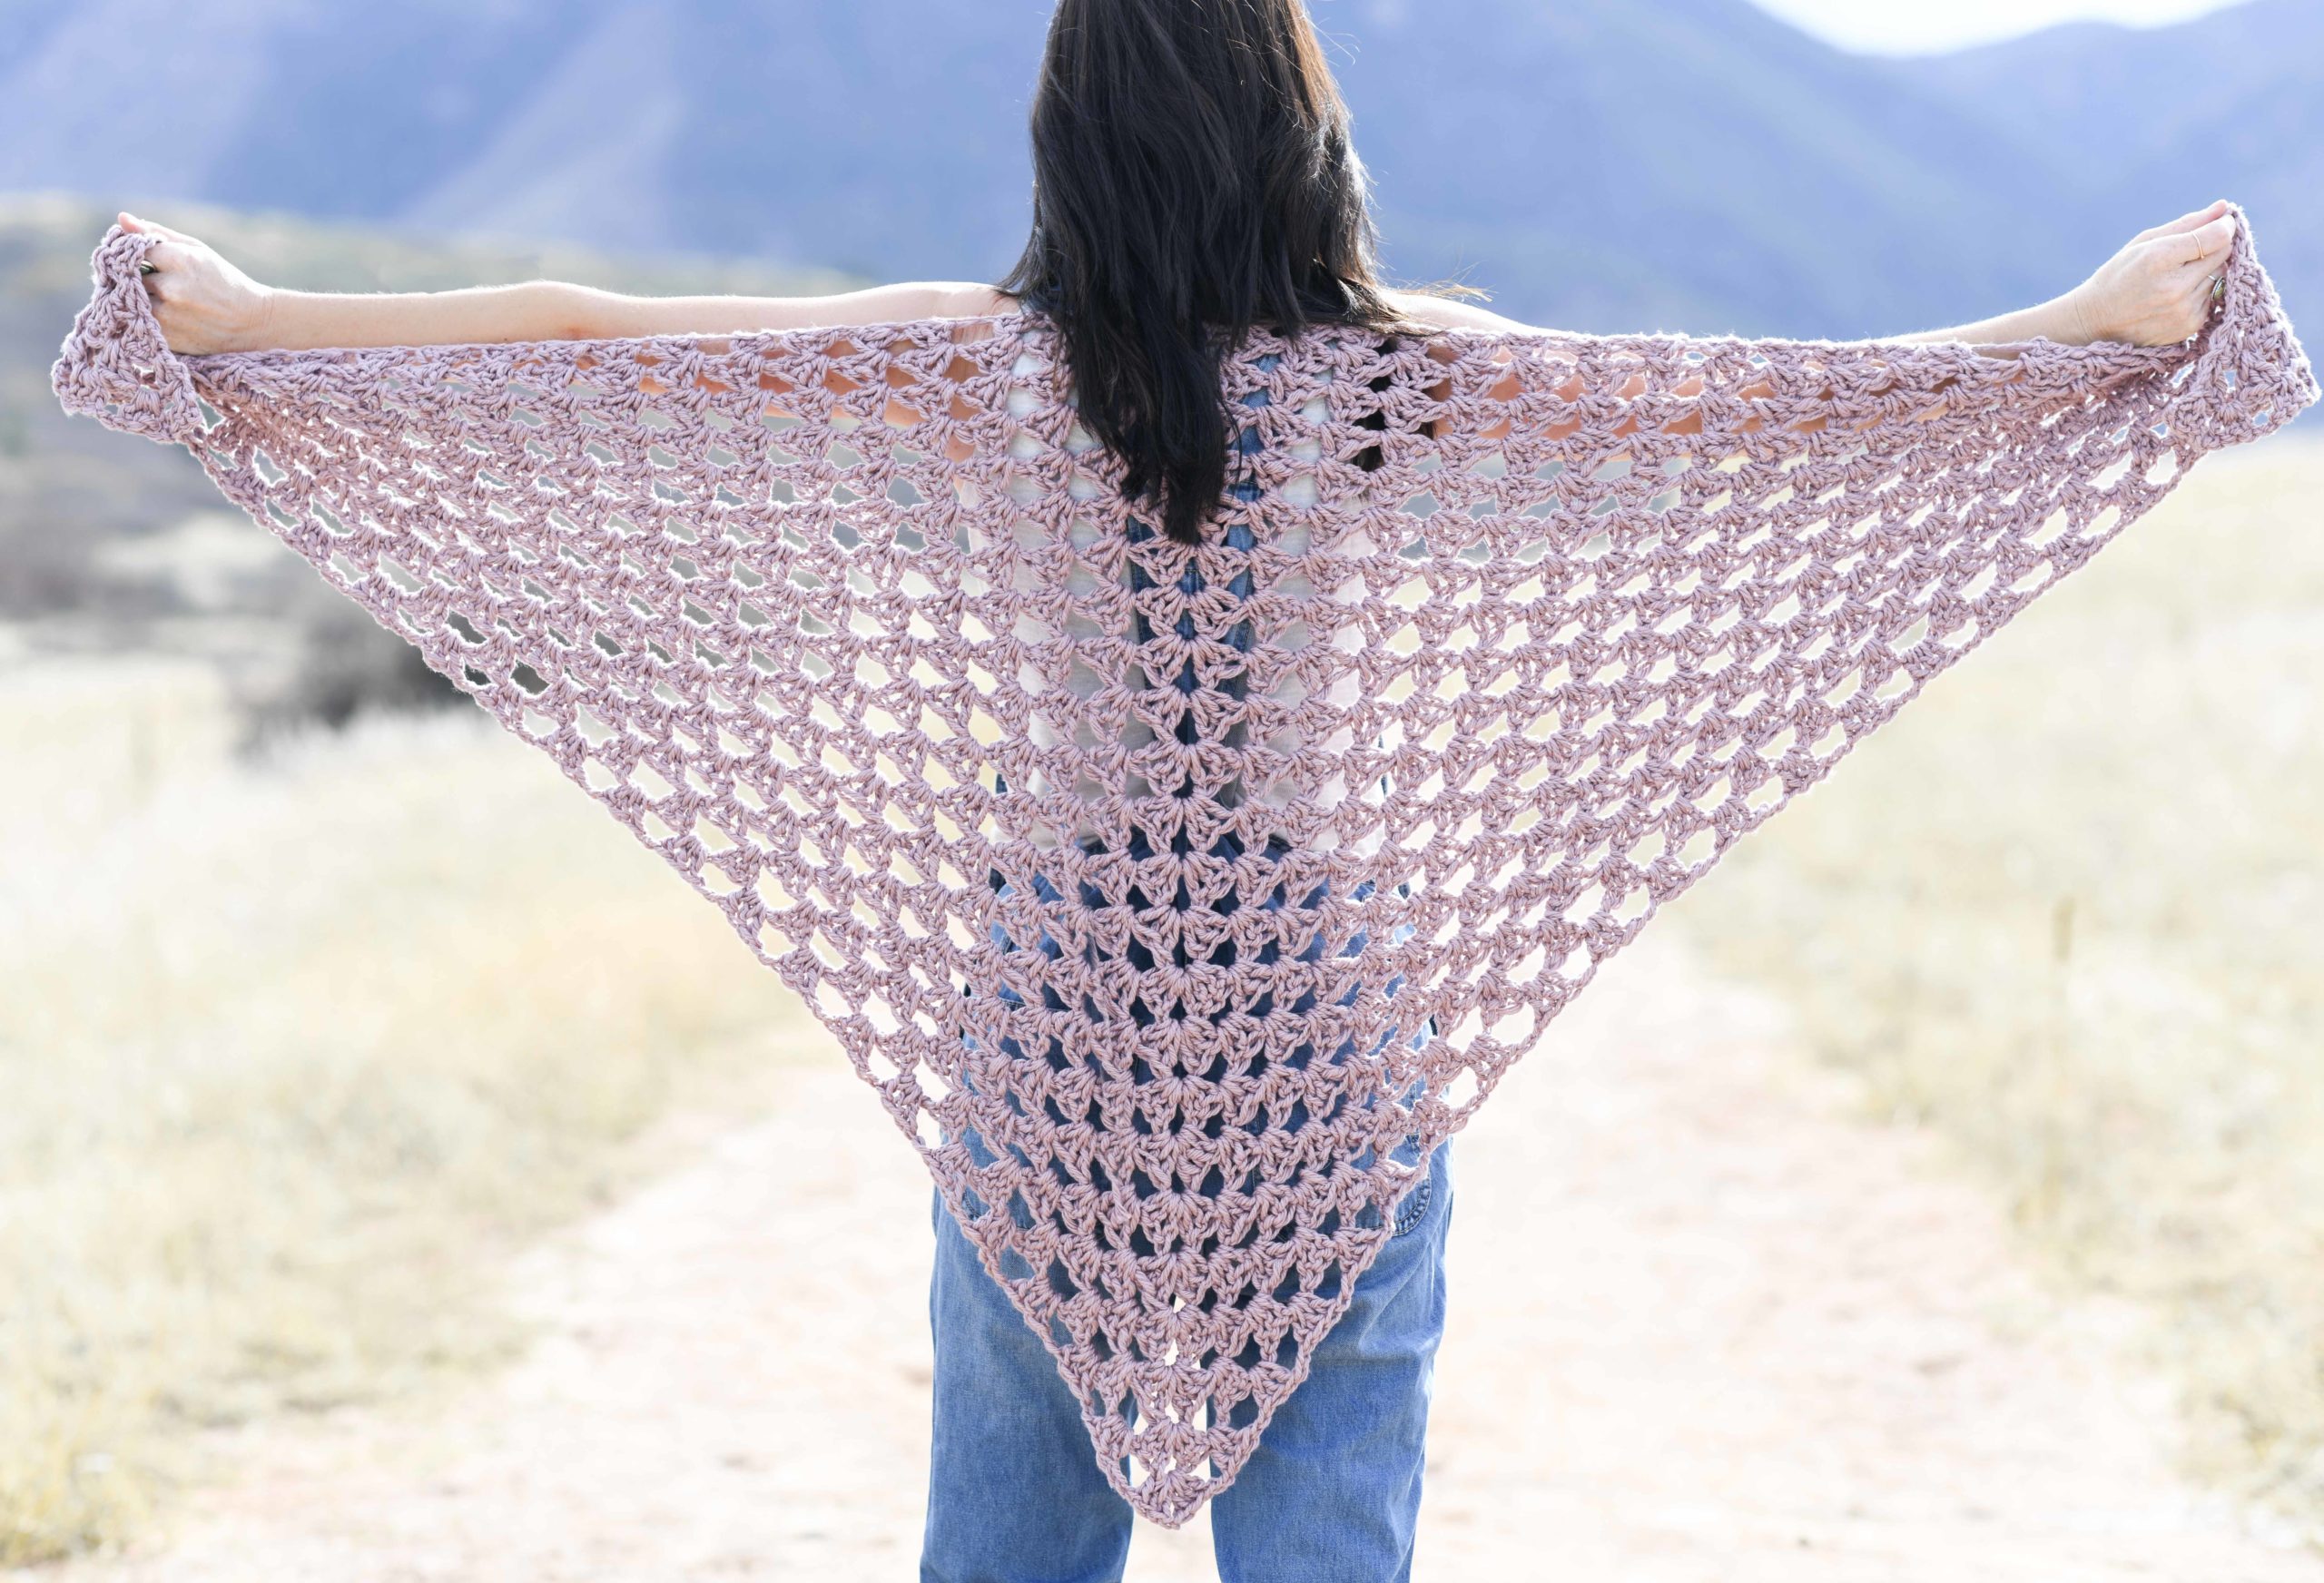 prayer shawl triangle crochet patterns